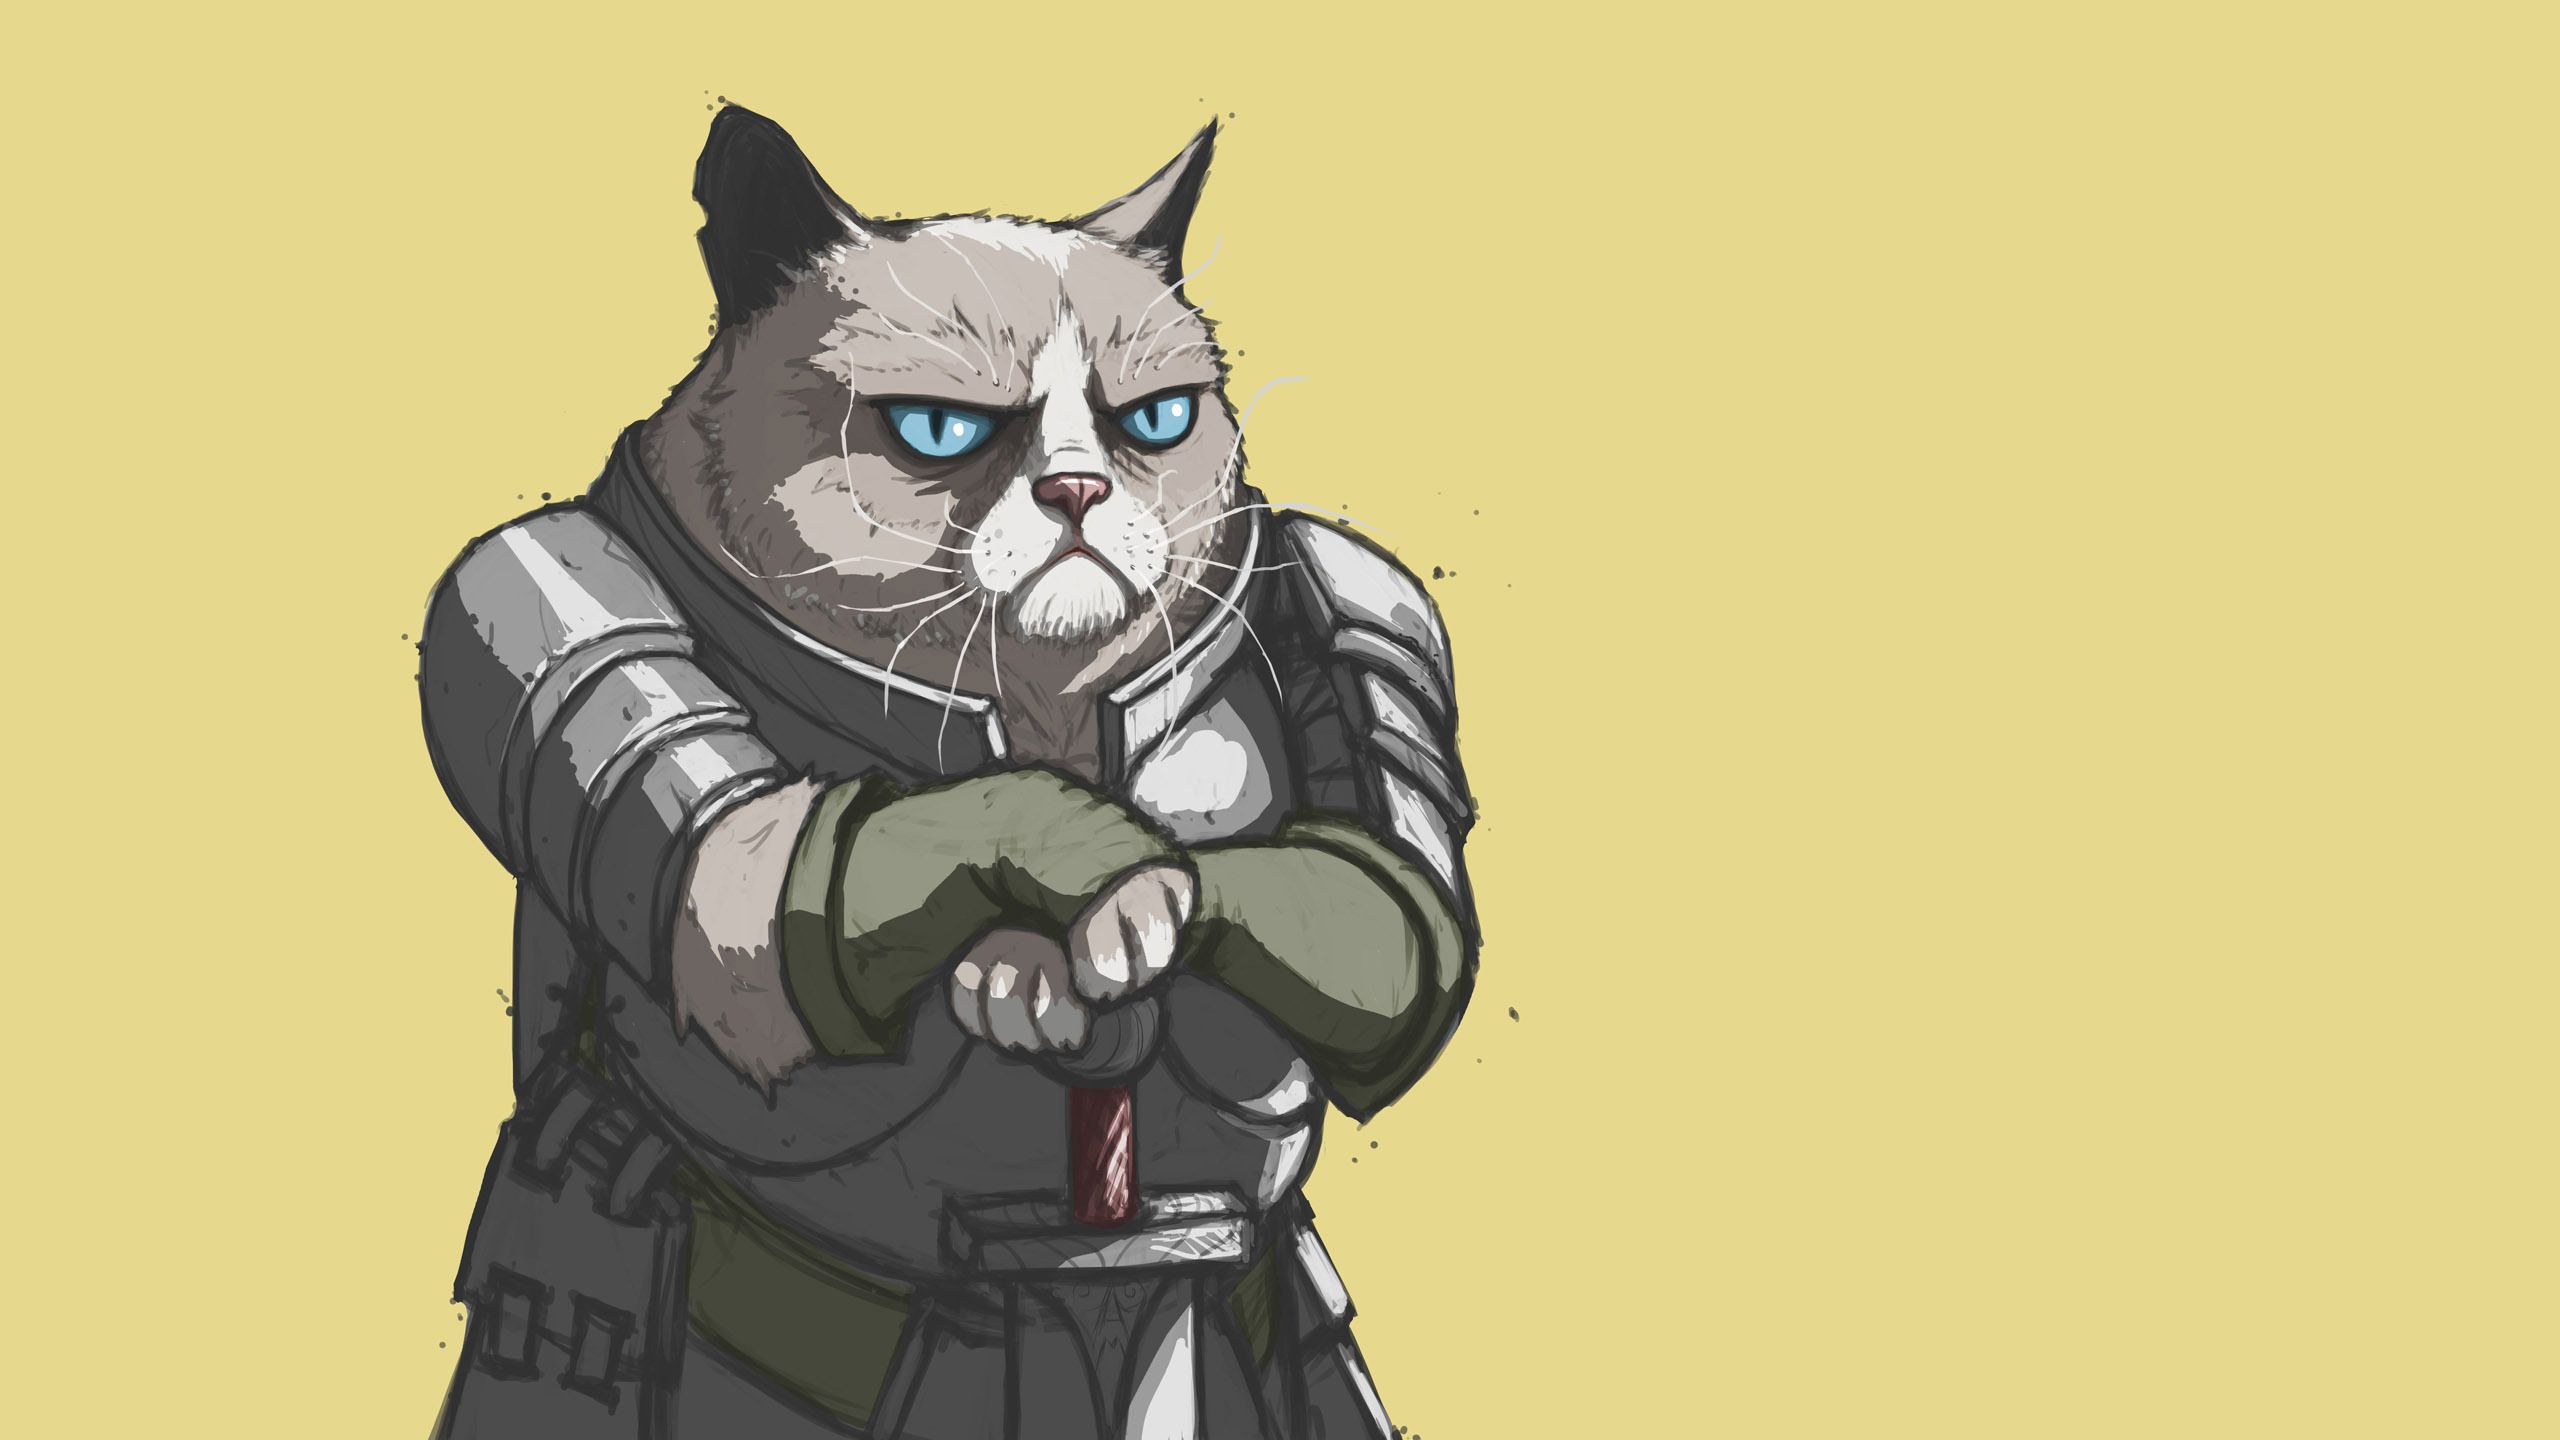 Grumpy-Cat-As-A-Knight-Wallpaper.jpg